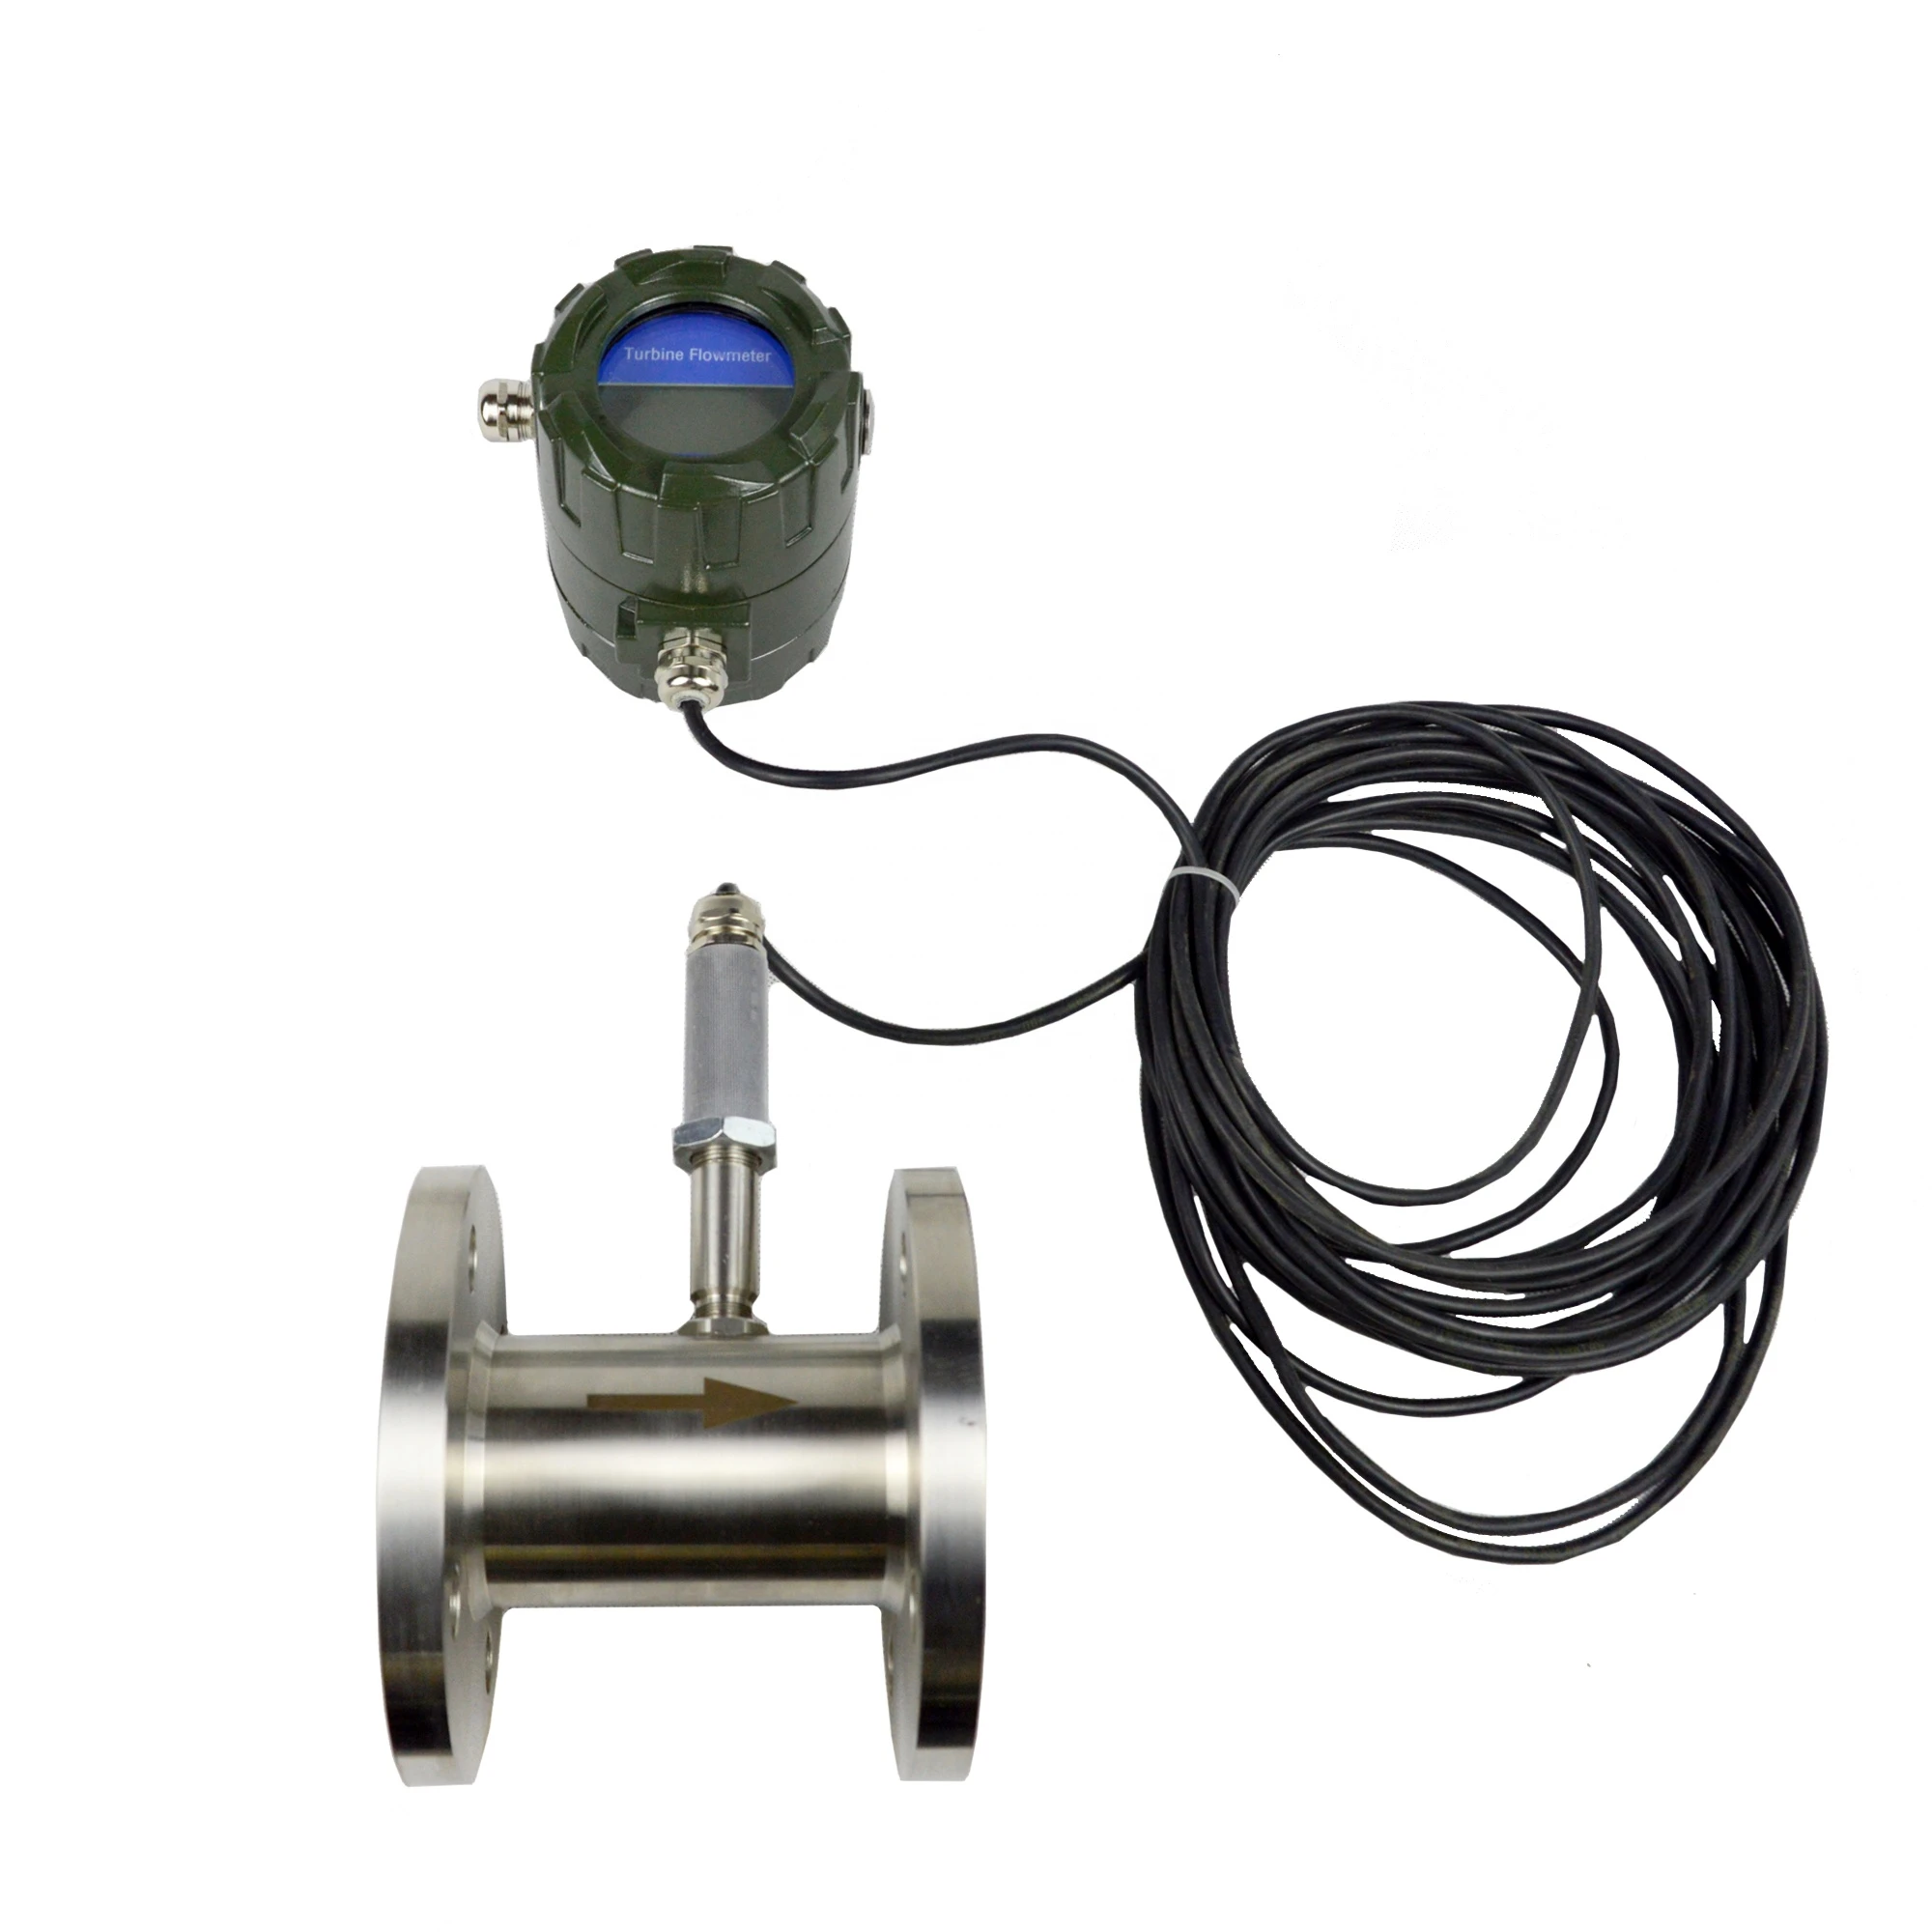 Liquid turbine flowmeter can measure the volume flow of tap water, alcohol, liquor, medicinal liquid, gasoline, diesel and other